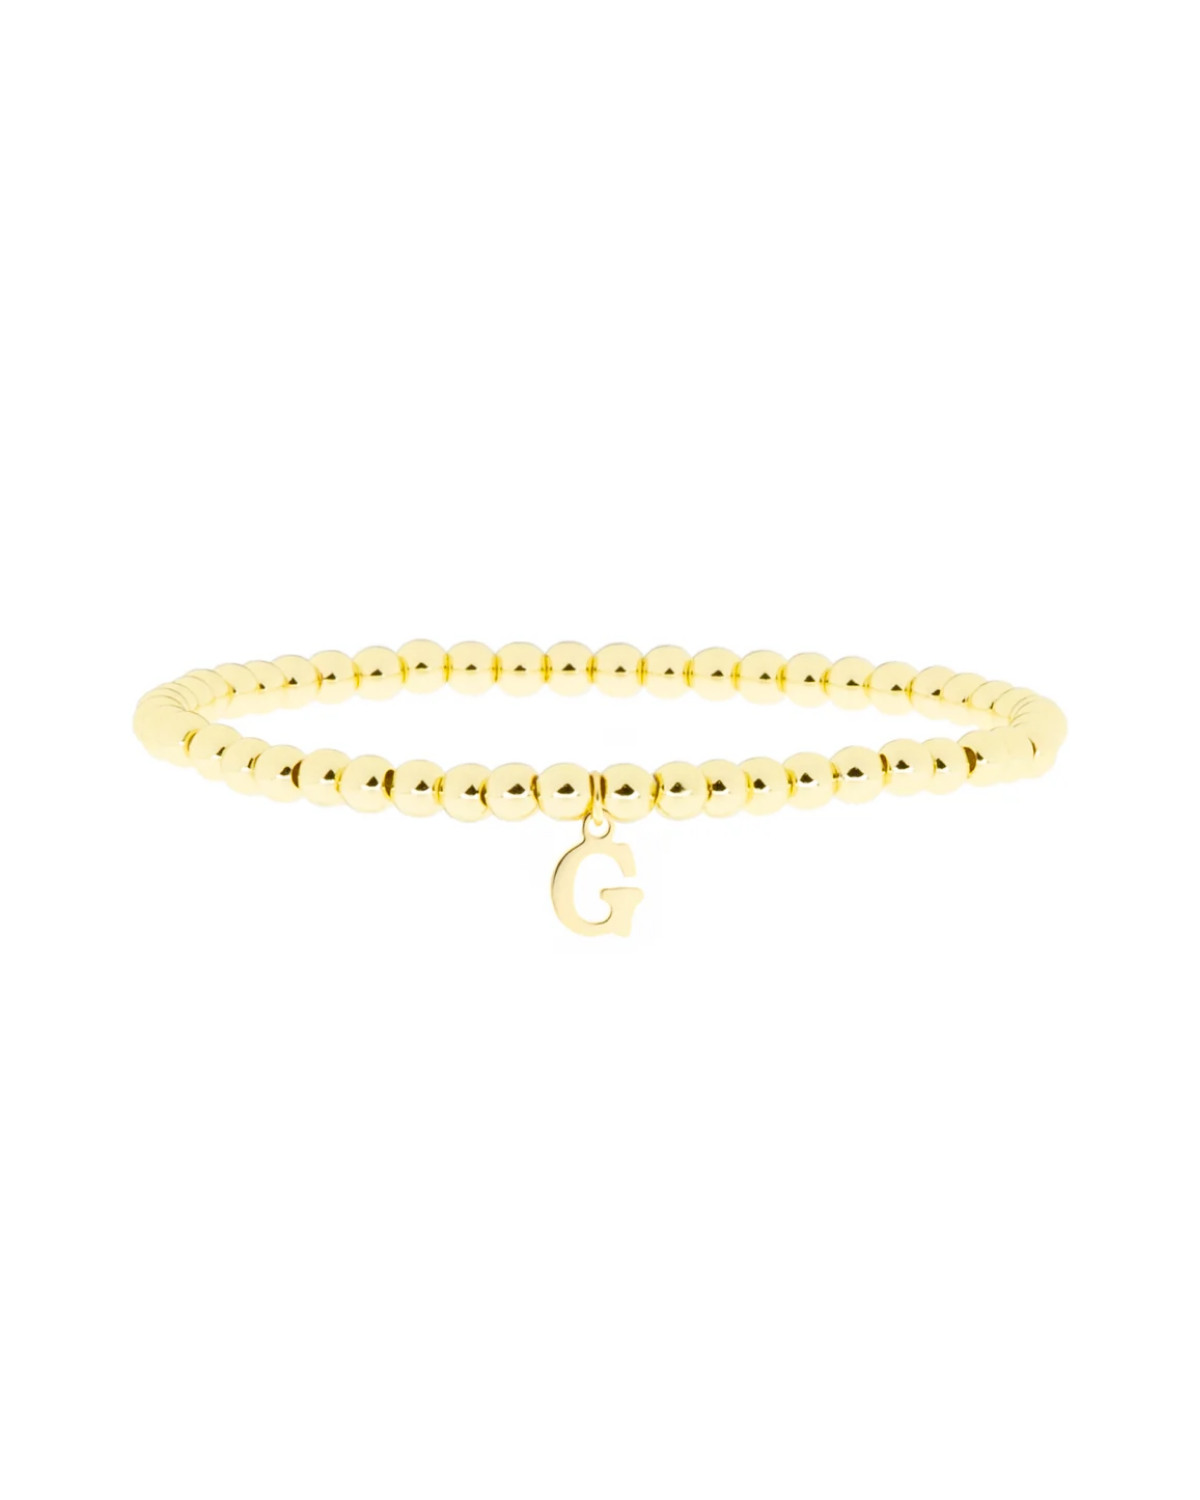 Gold Brass Initial Charm Ball Bracelet - G